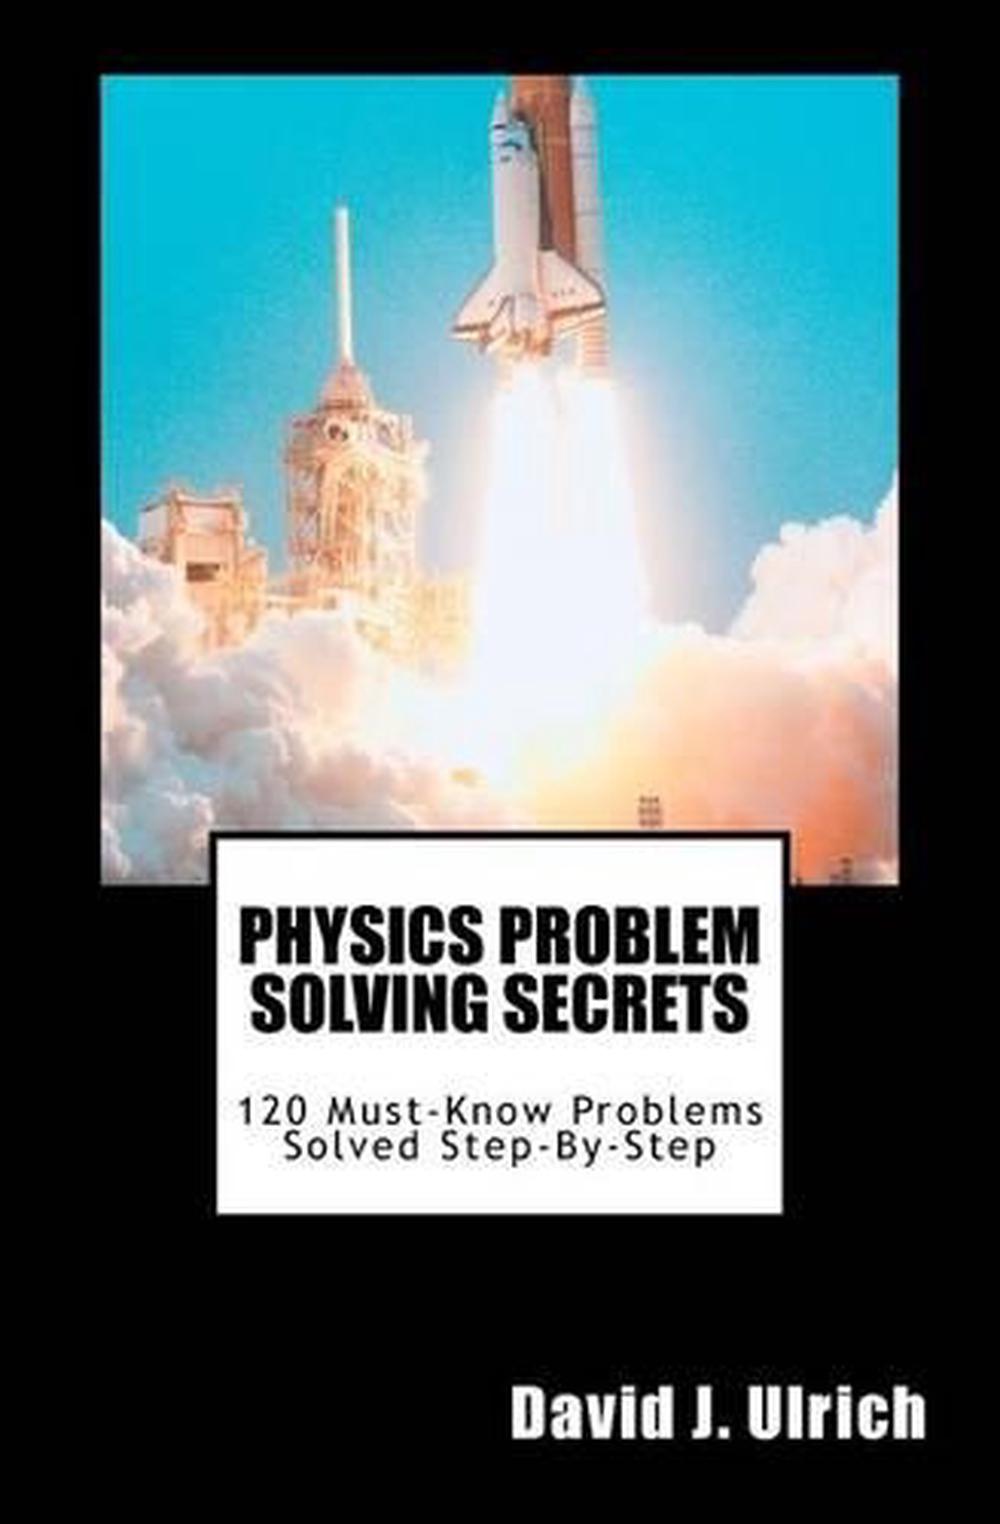 physics problem solving secrets pdf